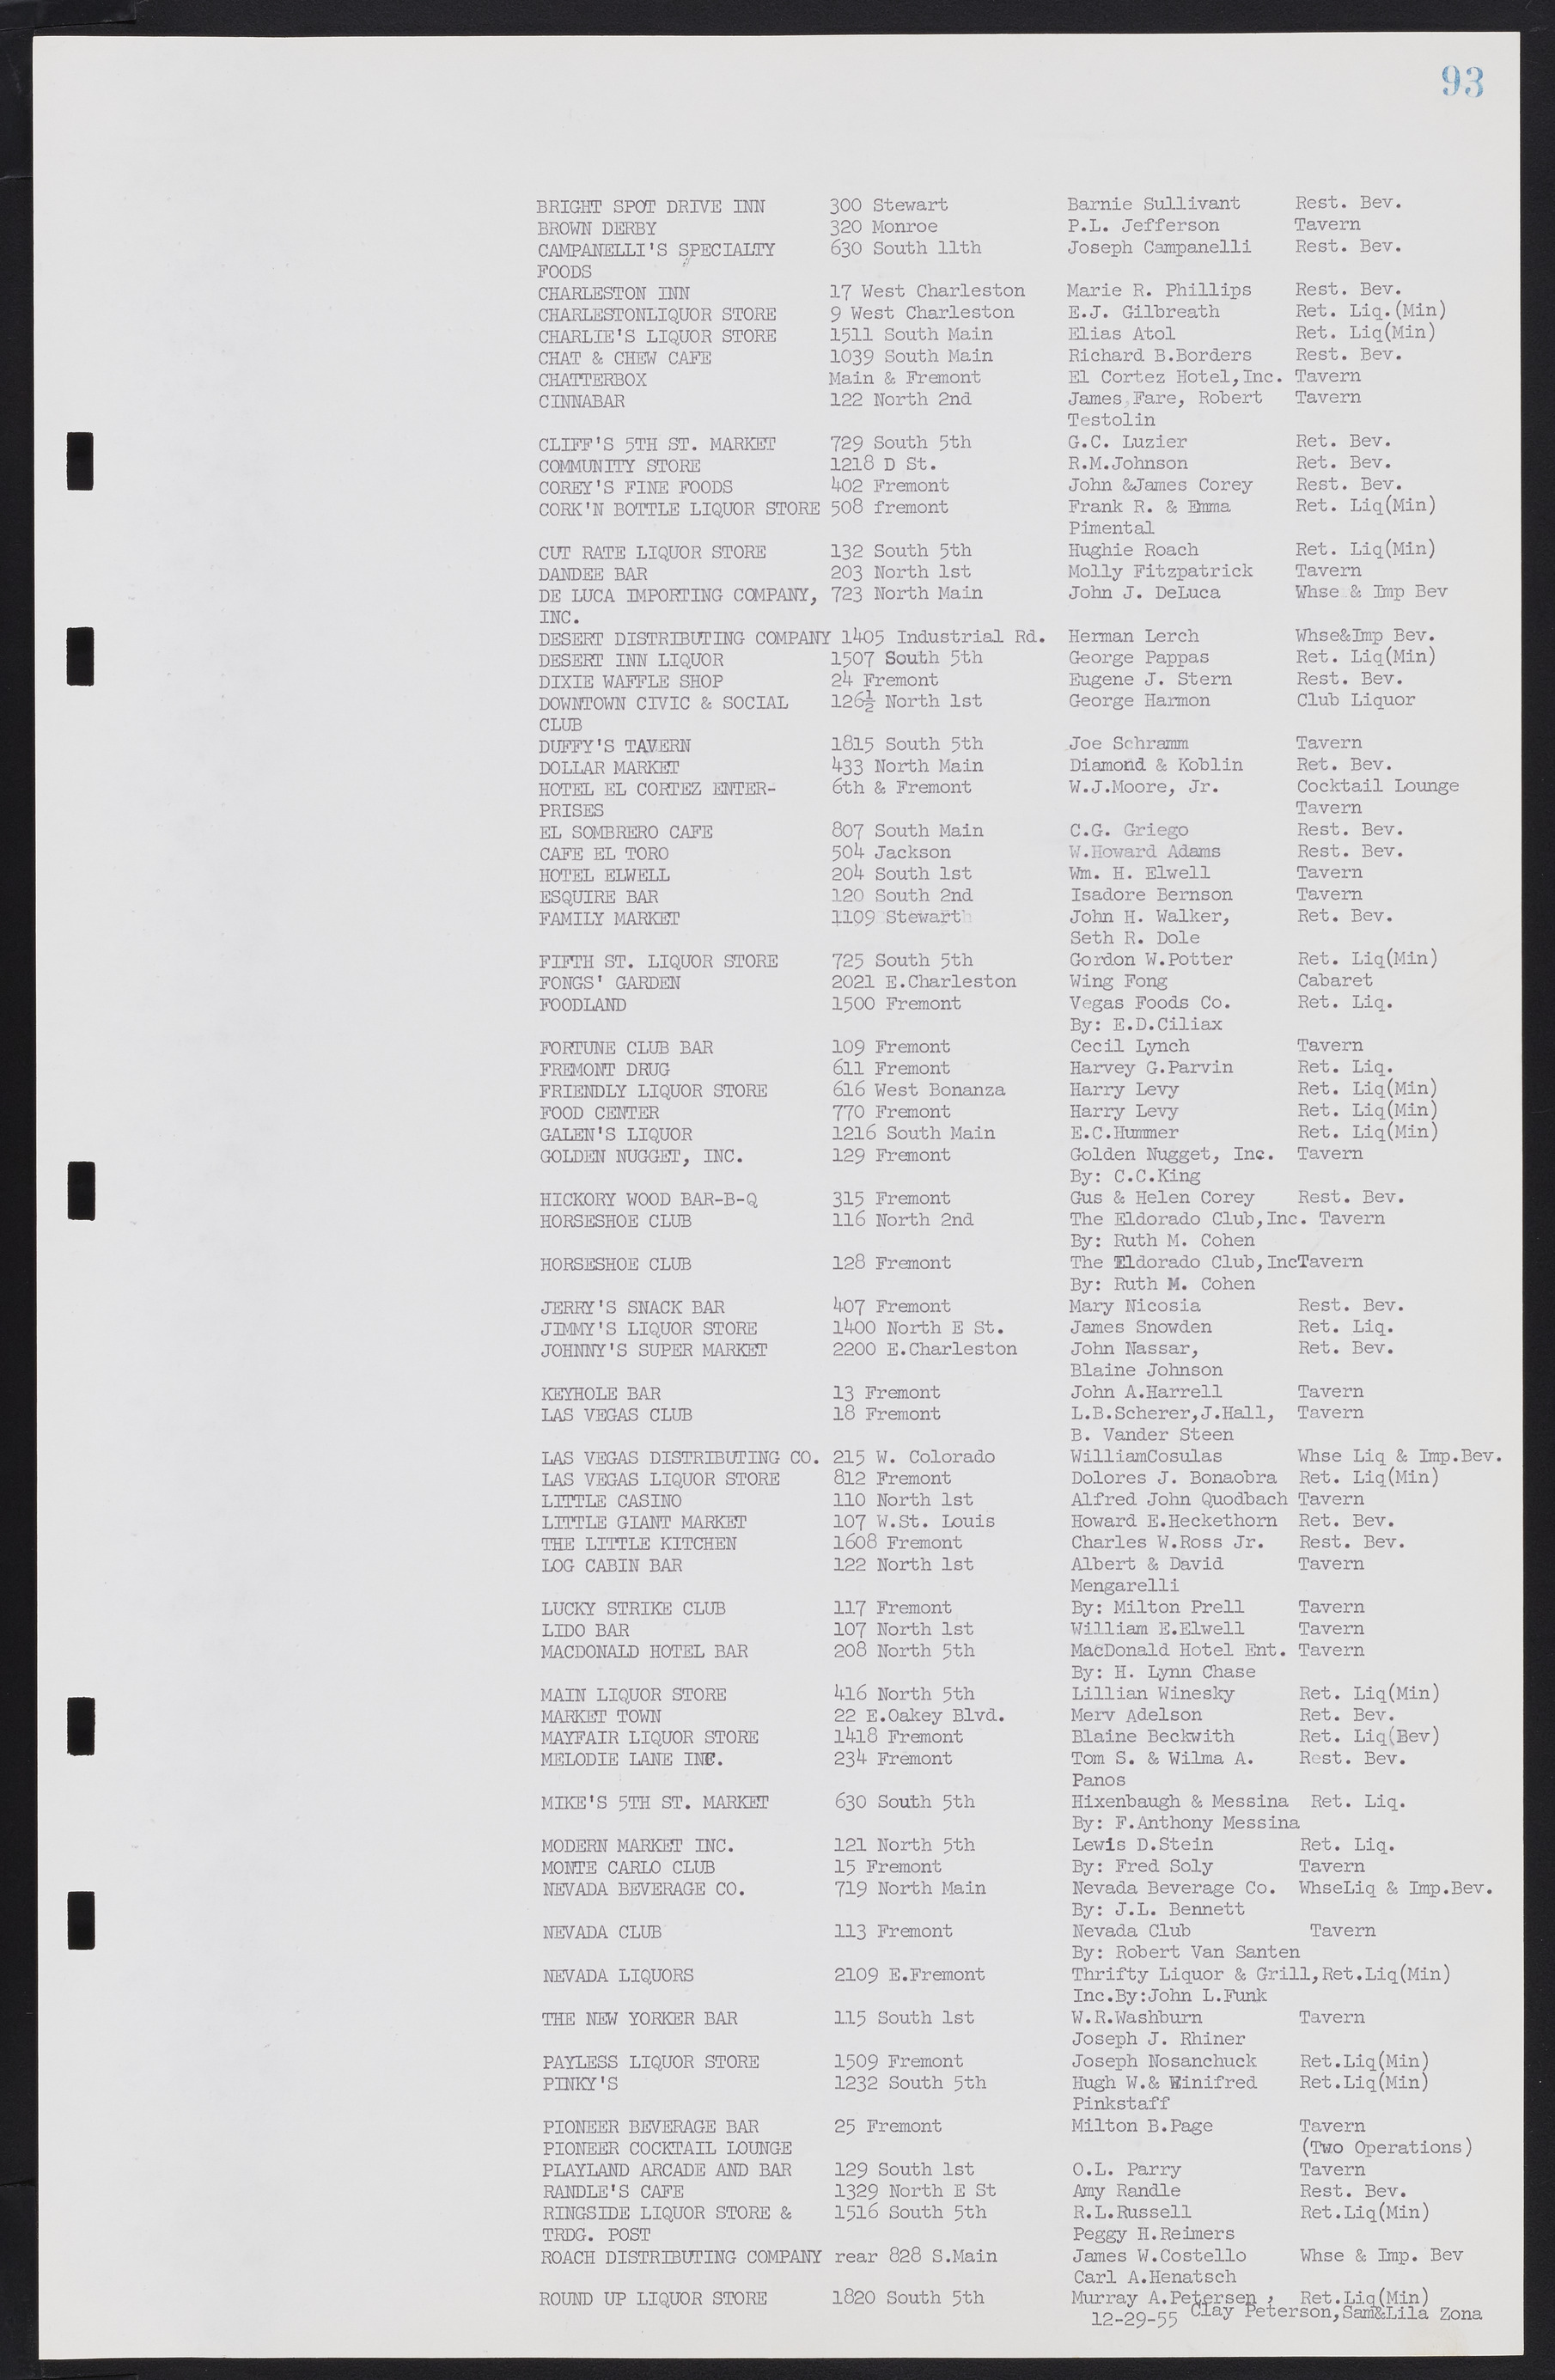 Las Vegas City Commission Minutes, September 21, 1955 to November 20, 1957, lvc000010-103